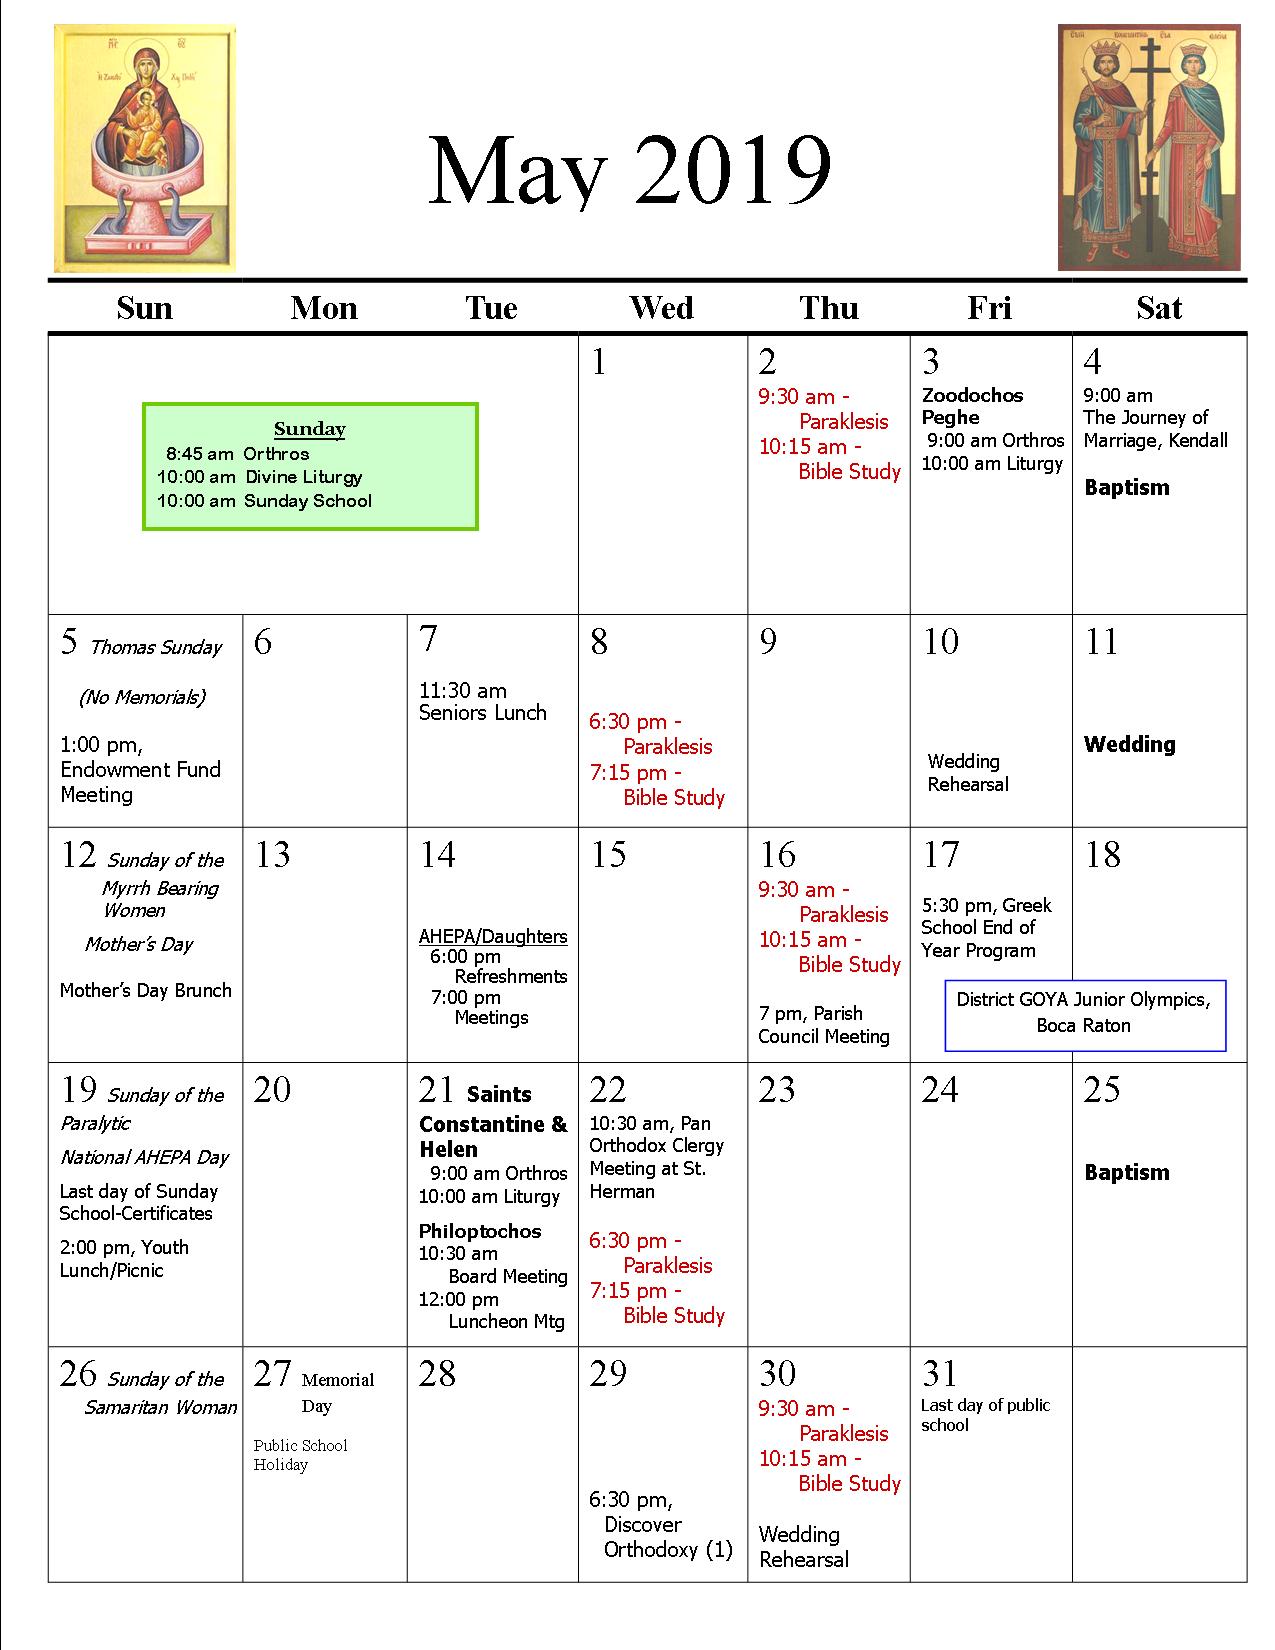 May 2019 Calendar, rev